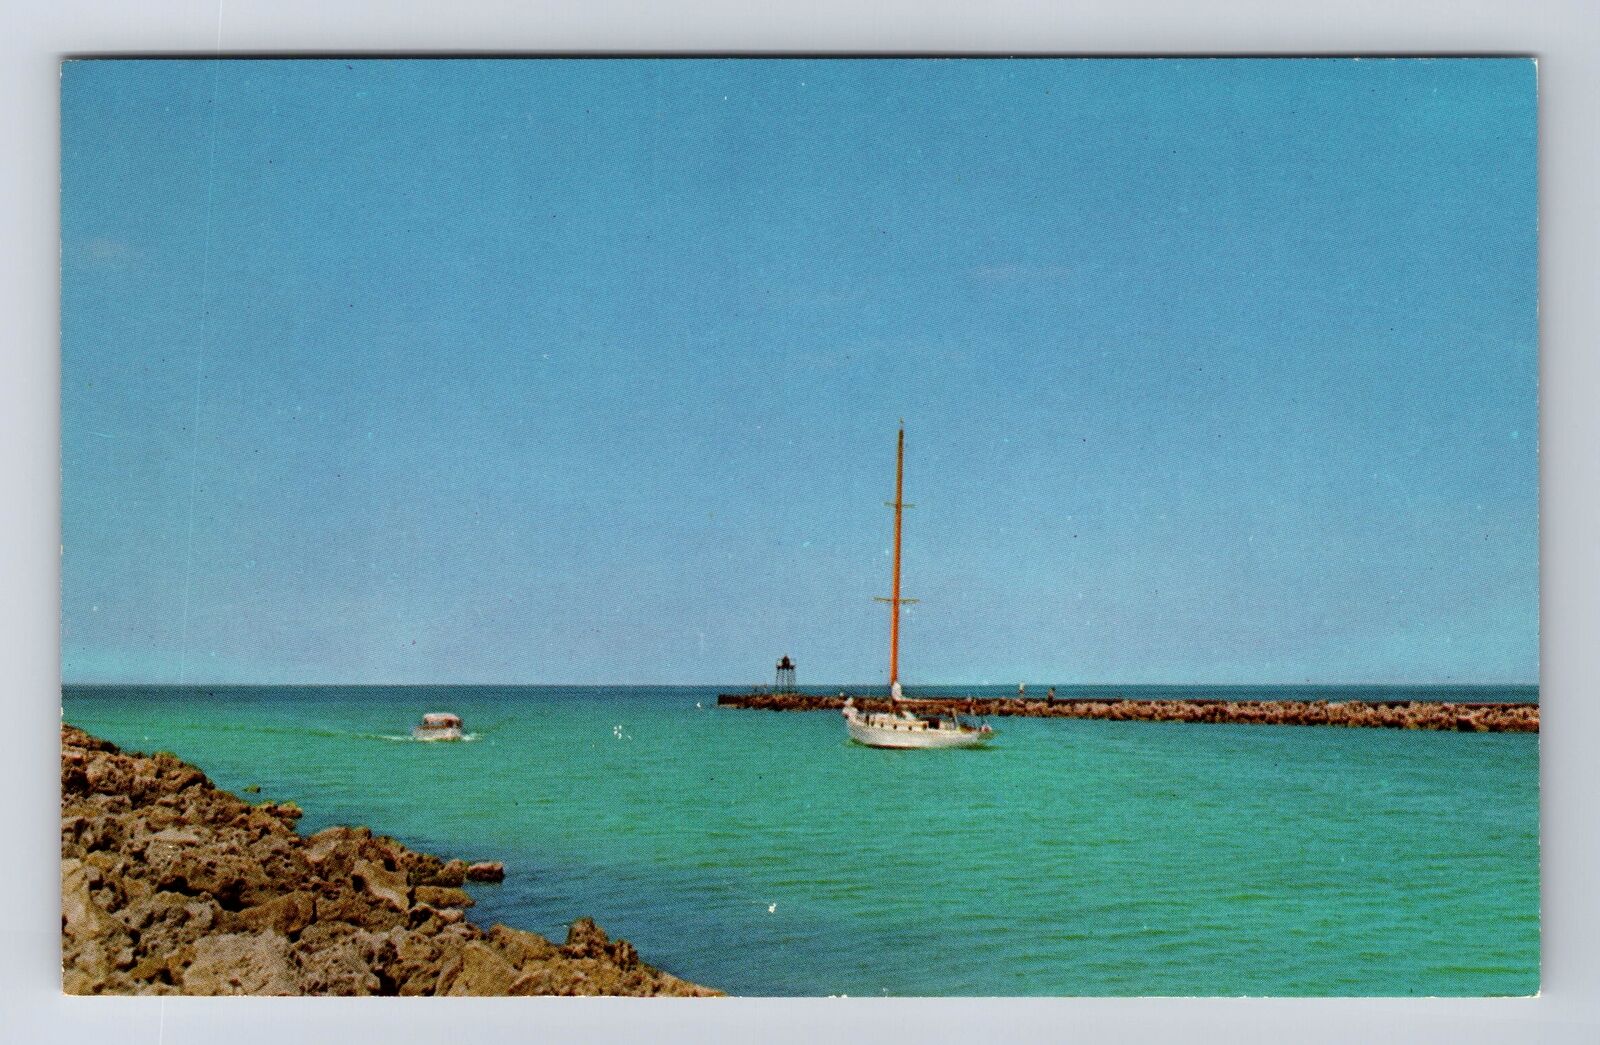 Venice FL-Florida, Jetties at Tarpon Center, Gulf of Mexico, Vintage Postcard